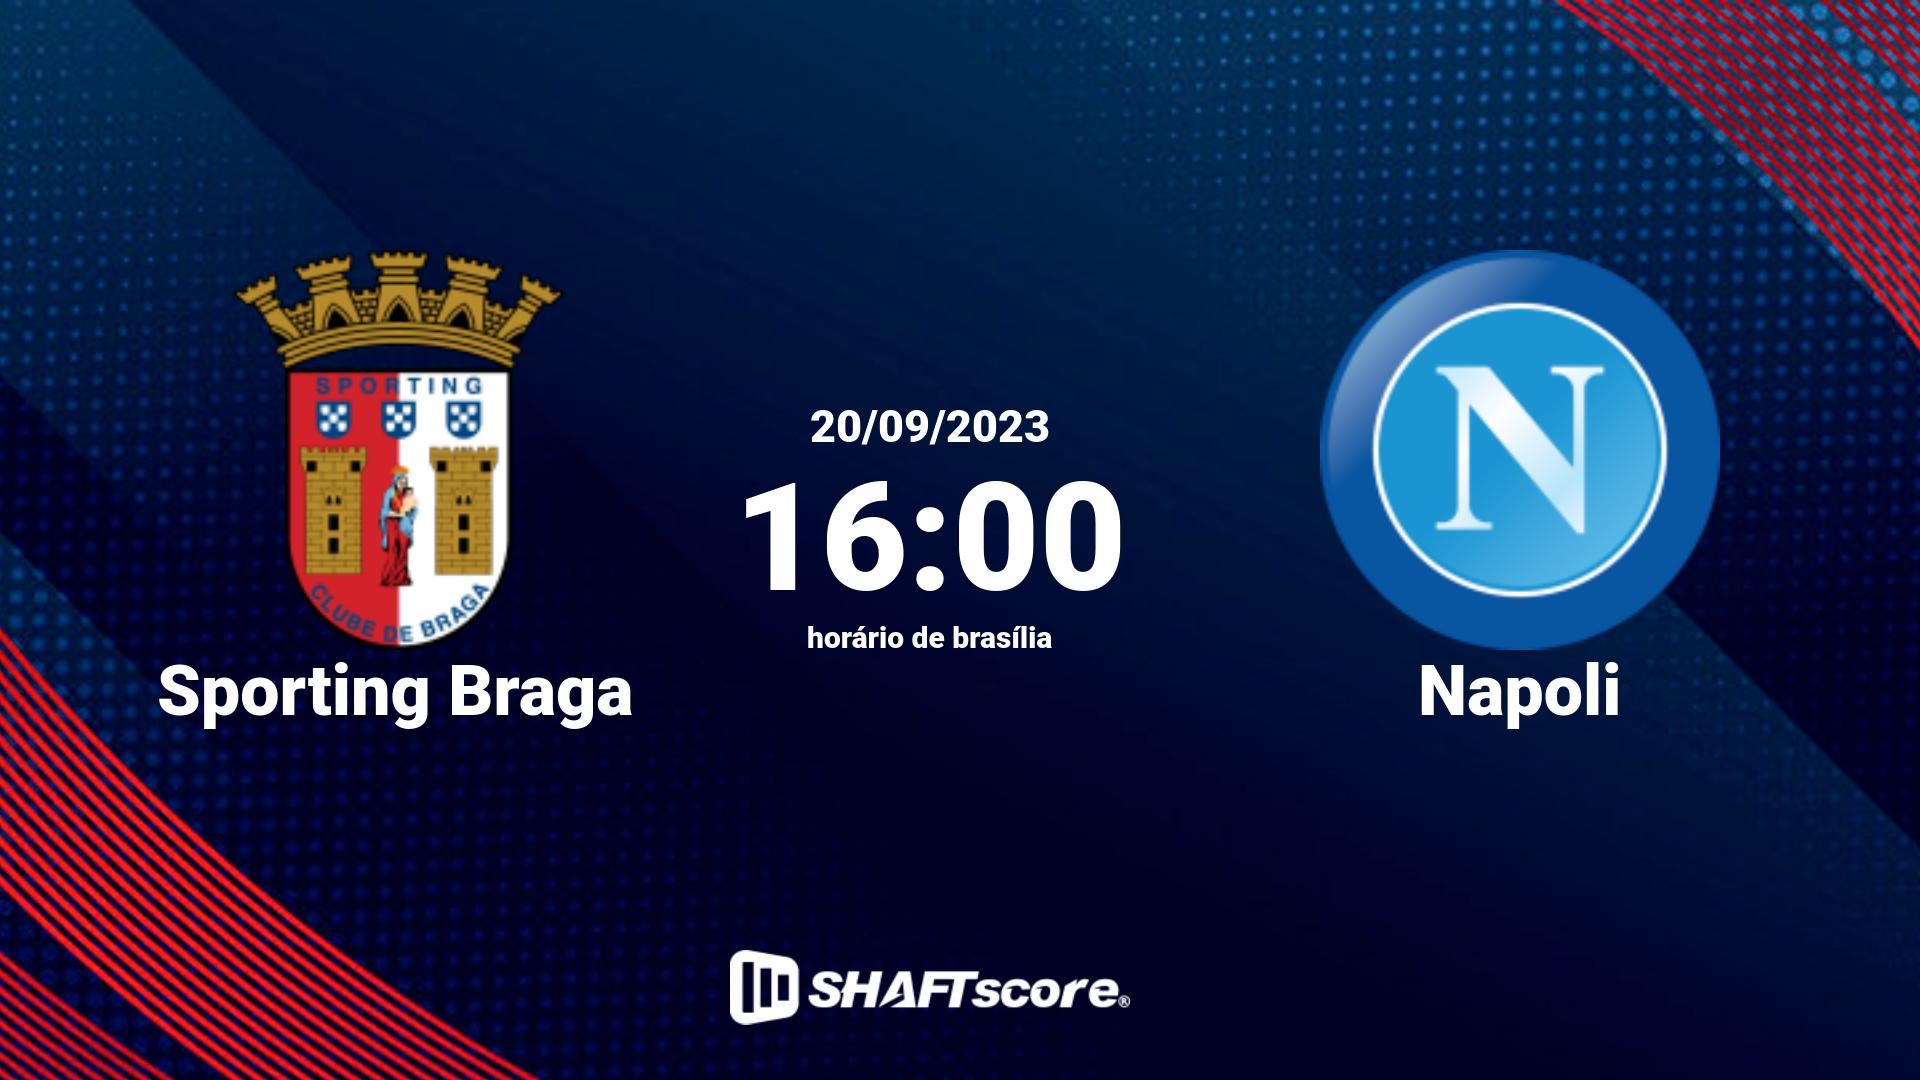 Estatísticas do jogo Sporting Braga vs Napoli 20.09 16:00